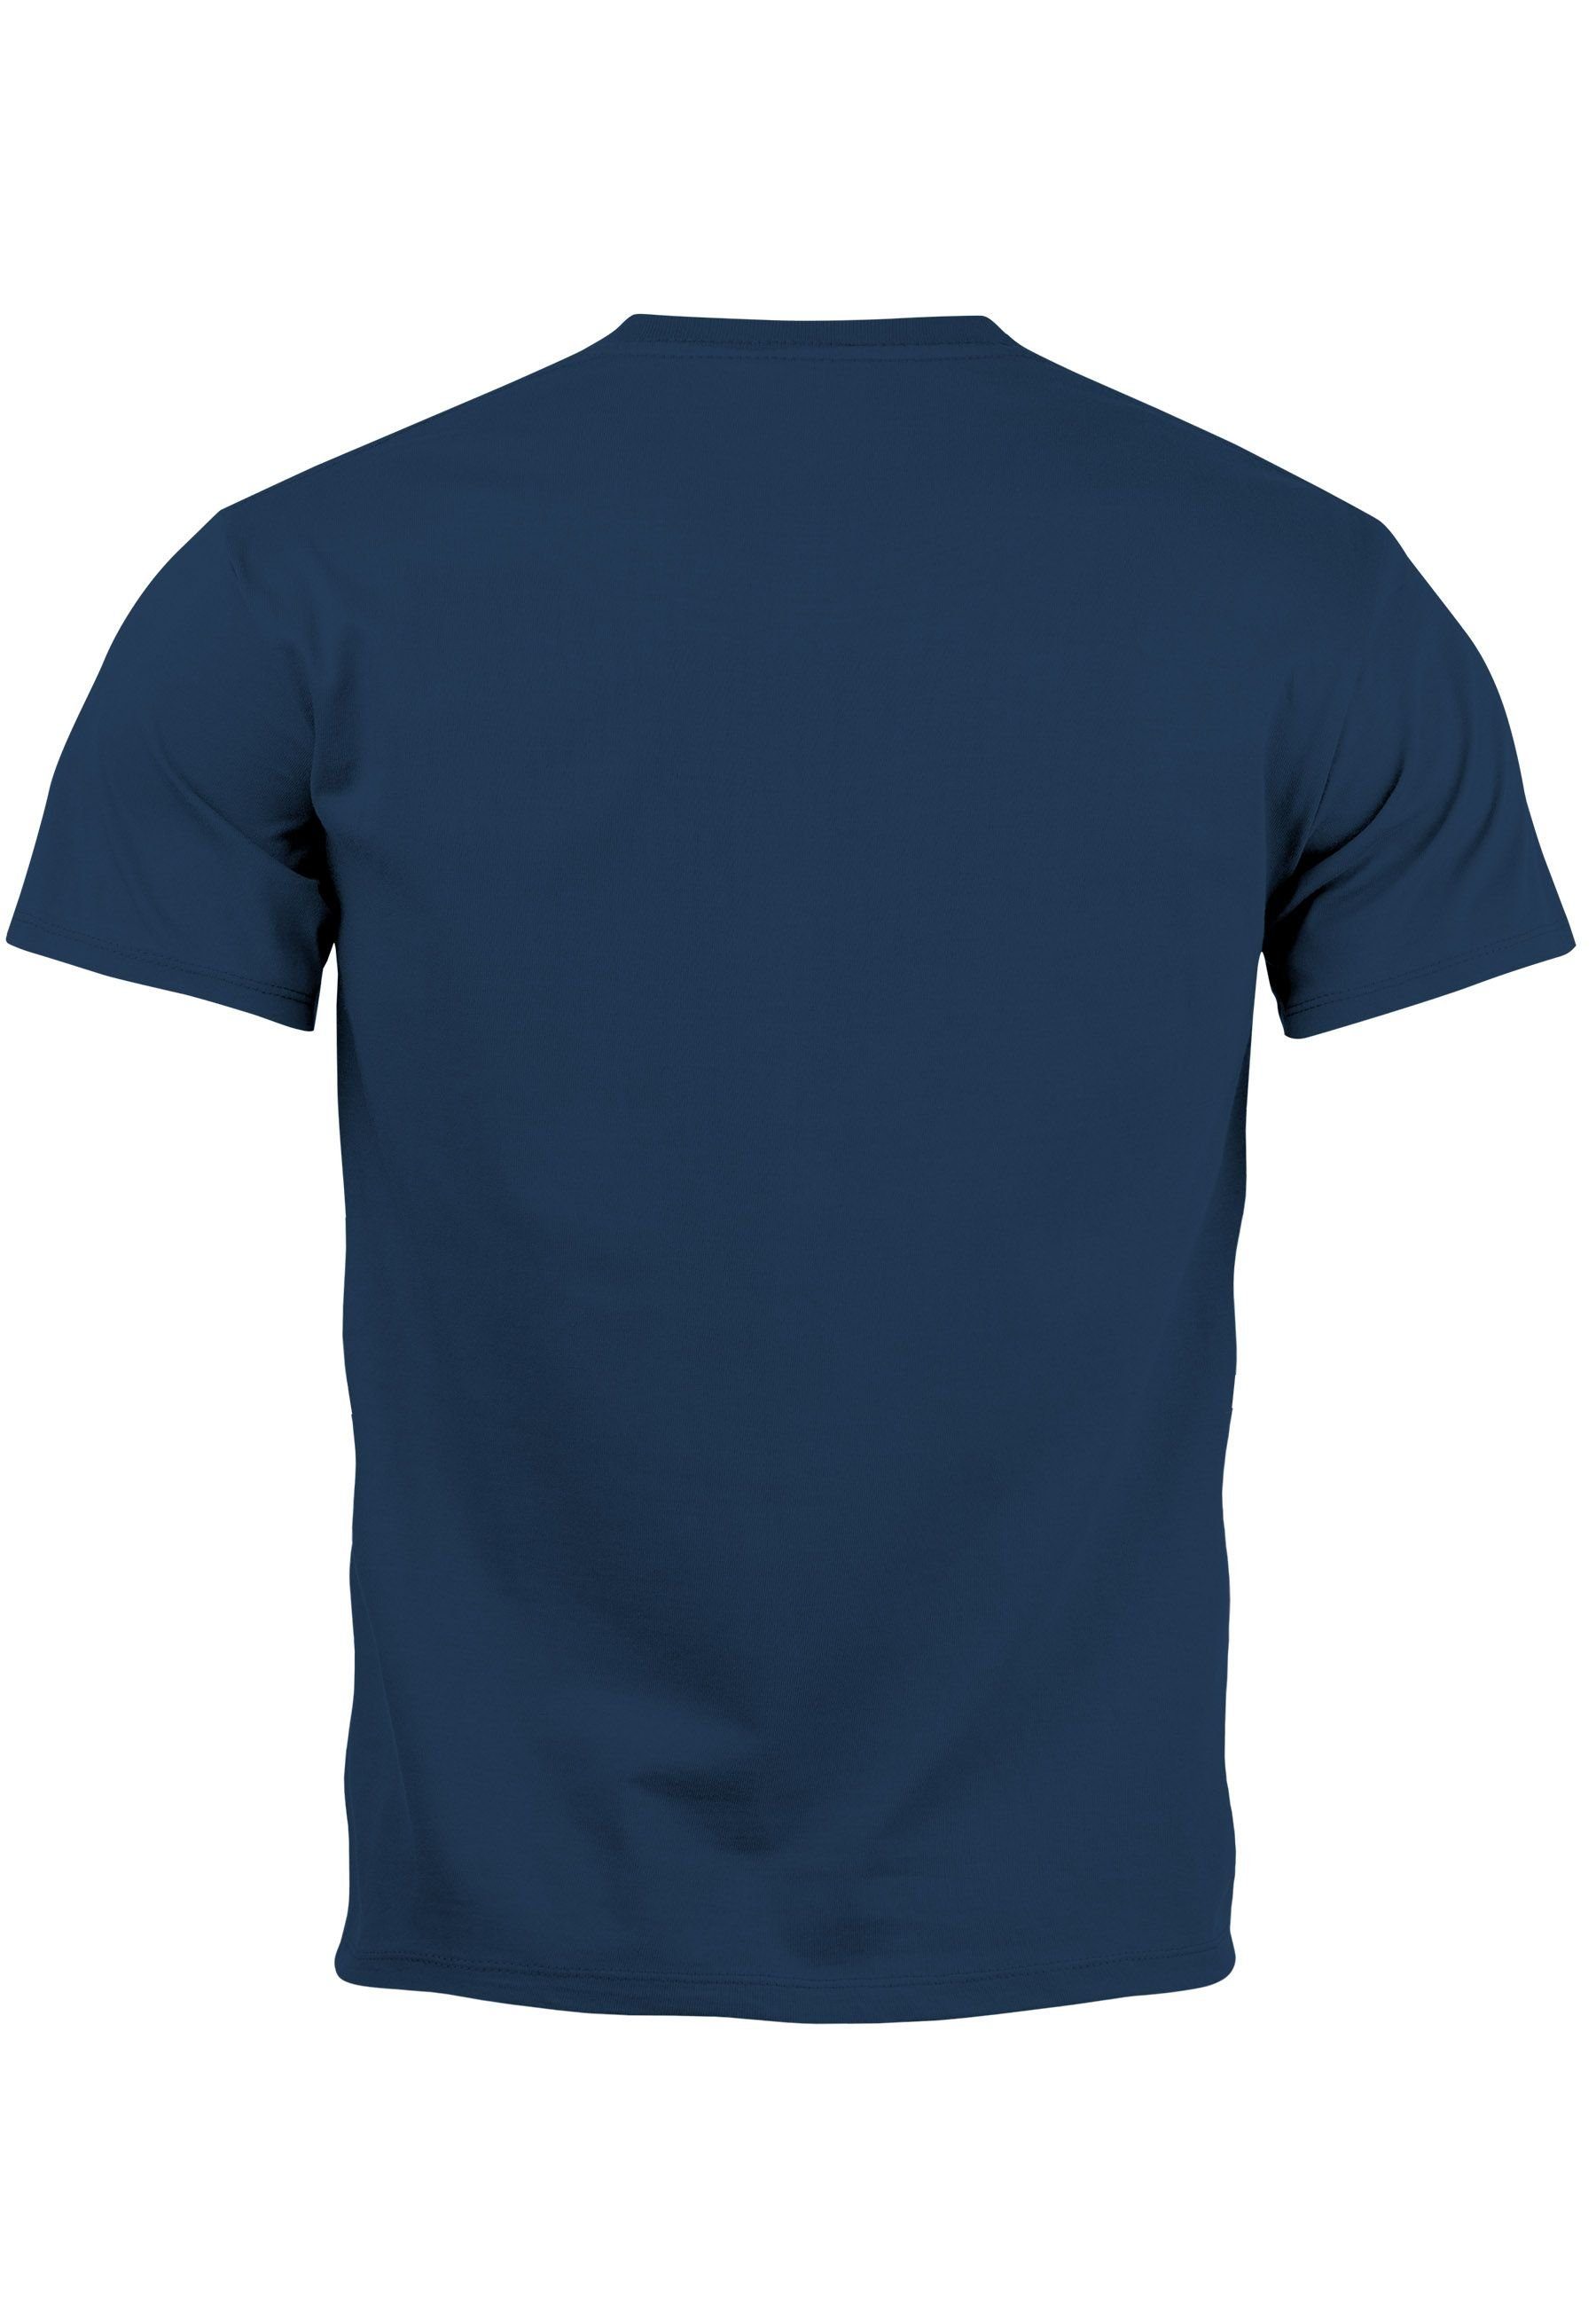 Print-Shirt Print Fashion T-Shirt Herren Neverless navy Polygon mit Outdoor Grafik Bedruckt Tiermotiv Wolf